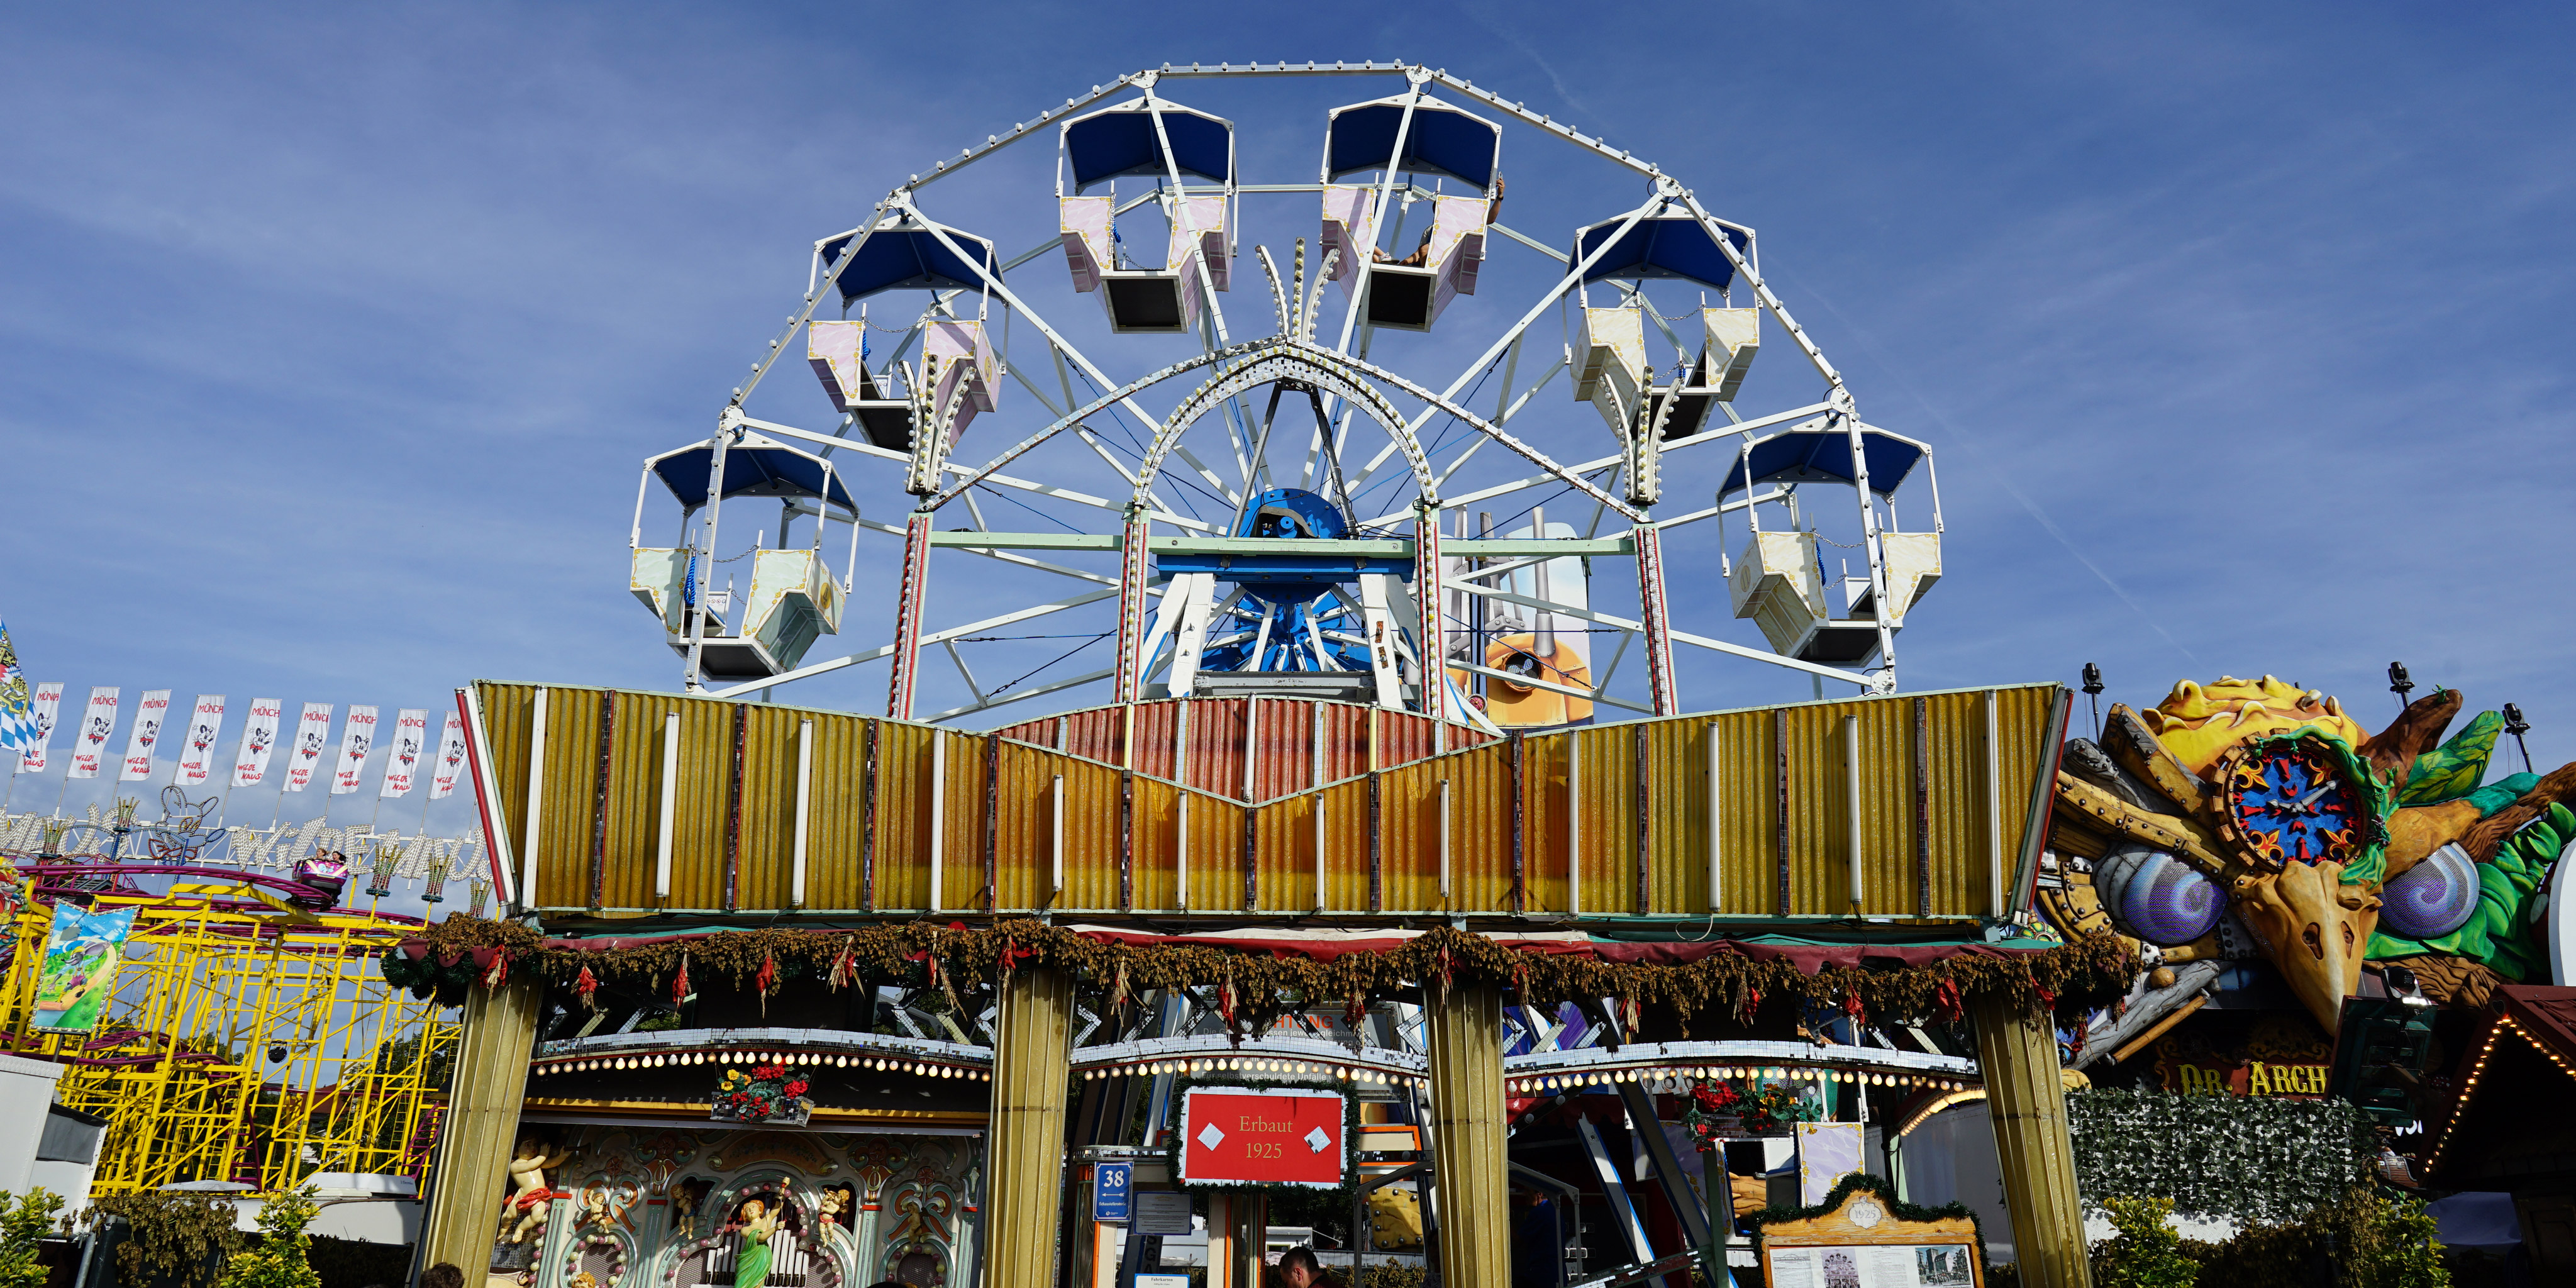 Russenrad - A Ferris wheel at the Munich Oktoberfest